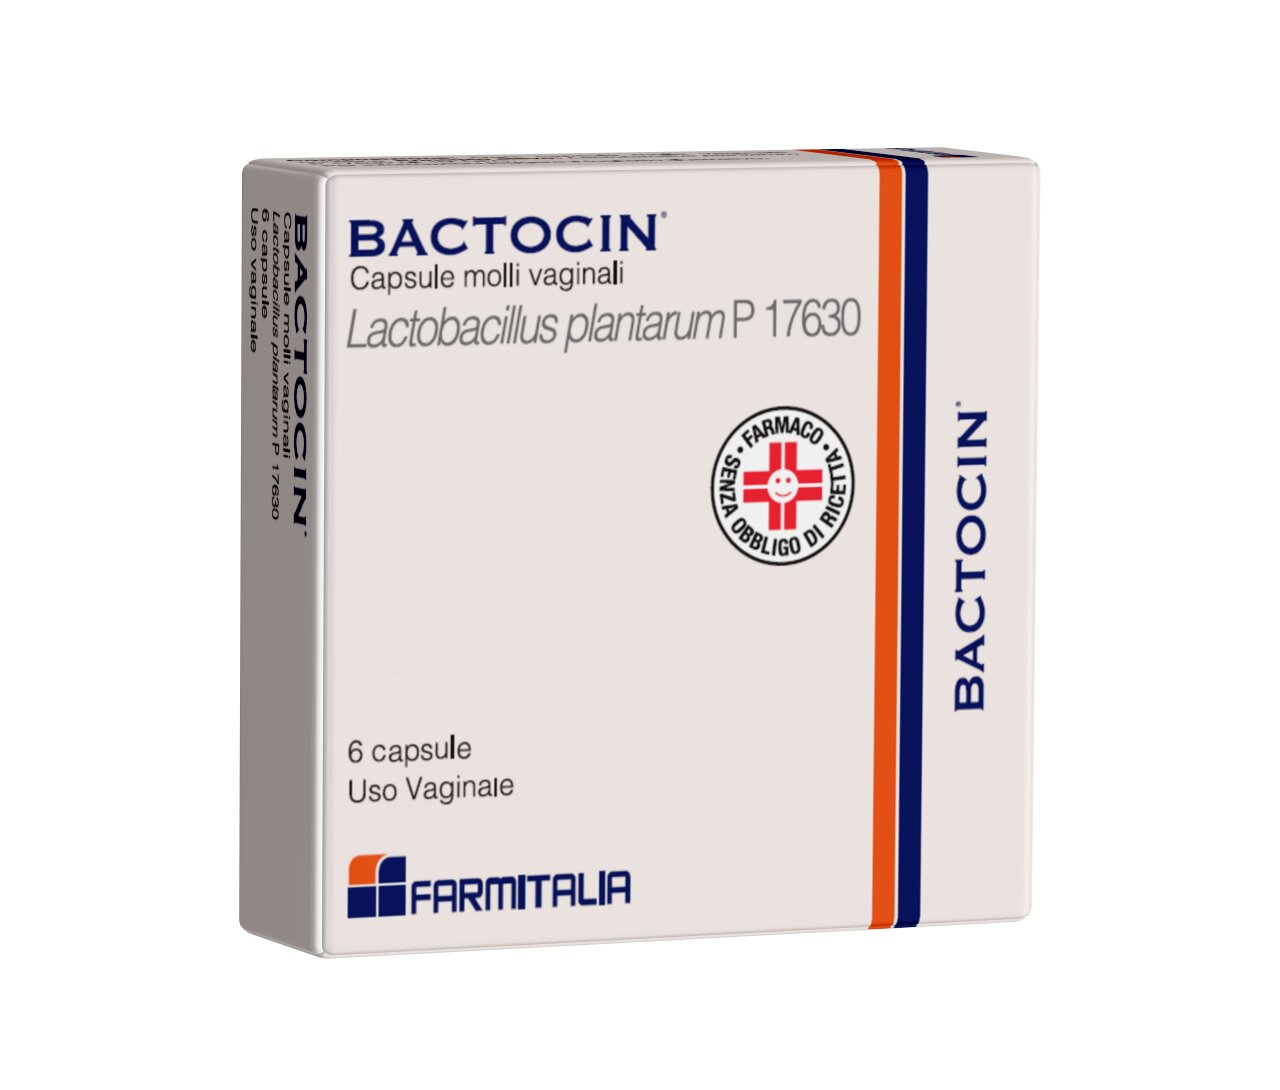 Bactocin 6 capsule molli vaginali